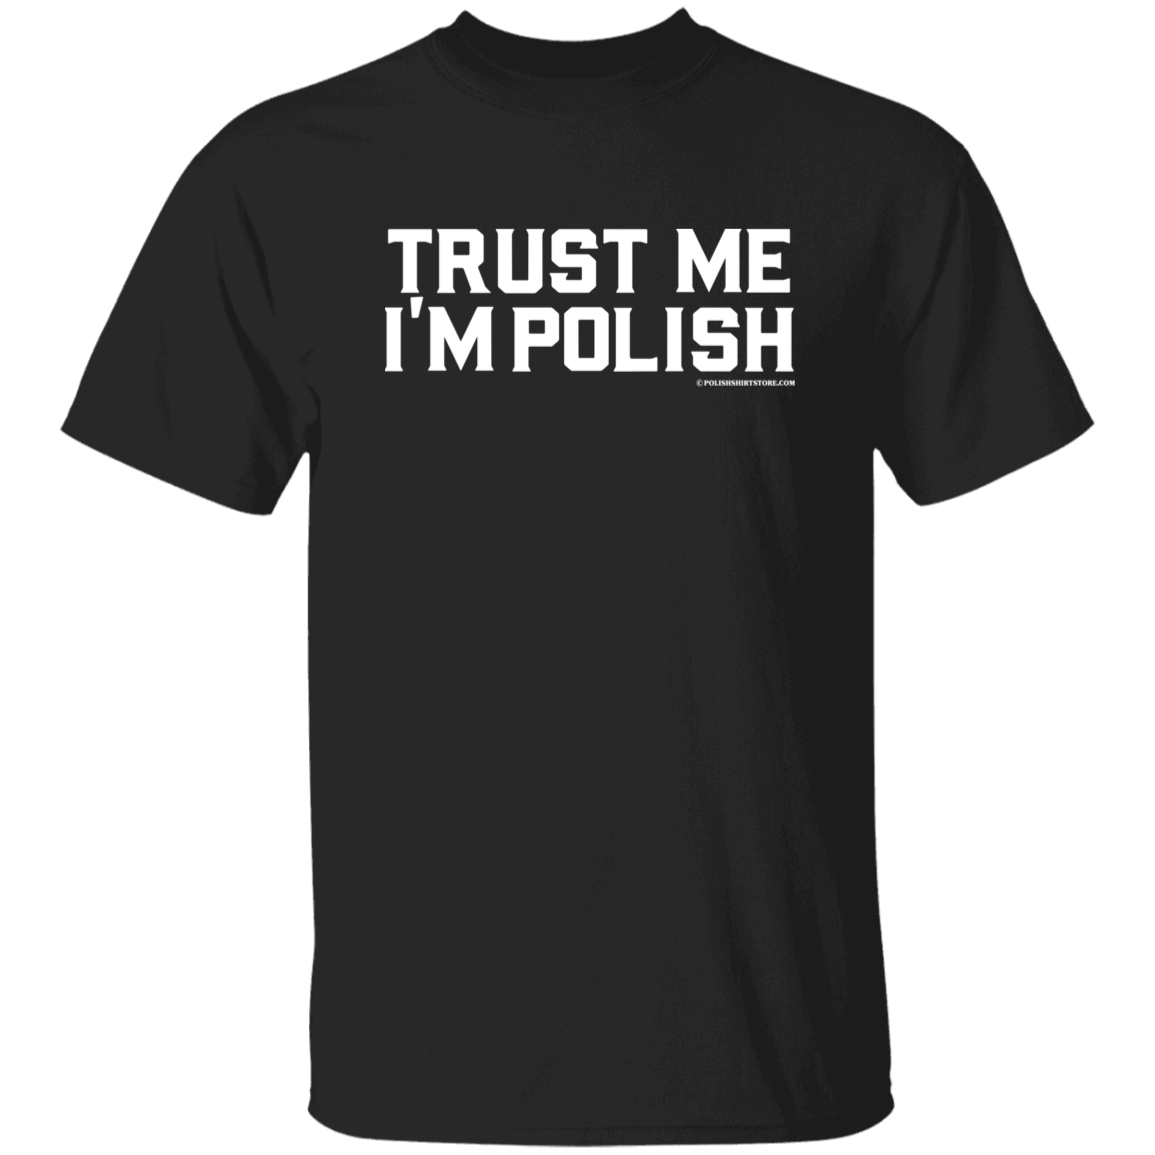 Trust Me I'm Polish Apparel CustomCat G500 5.3 oz. T-Shirt Black S